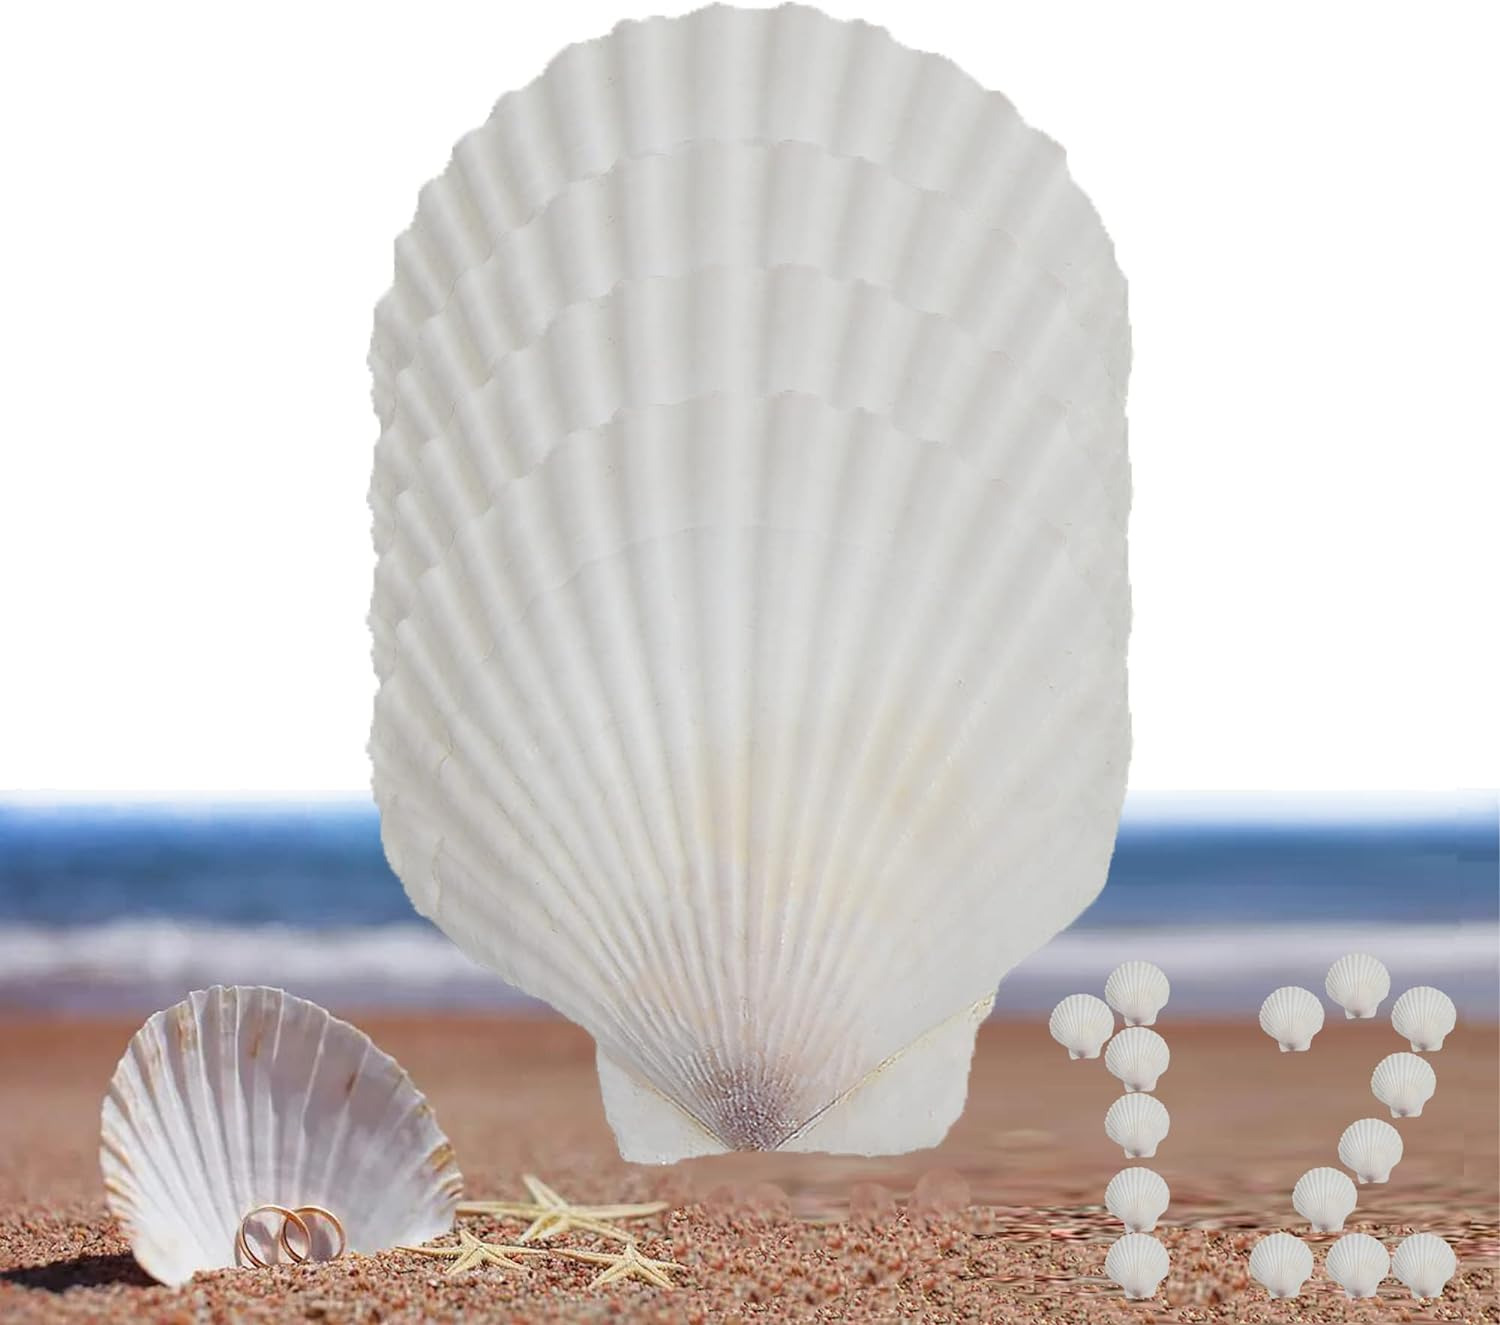 12 Pcs Sea Shells White Large Scallop Shells for Baking Cooking, Big Natural Cla